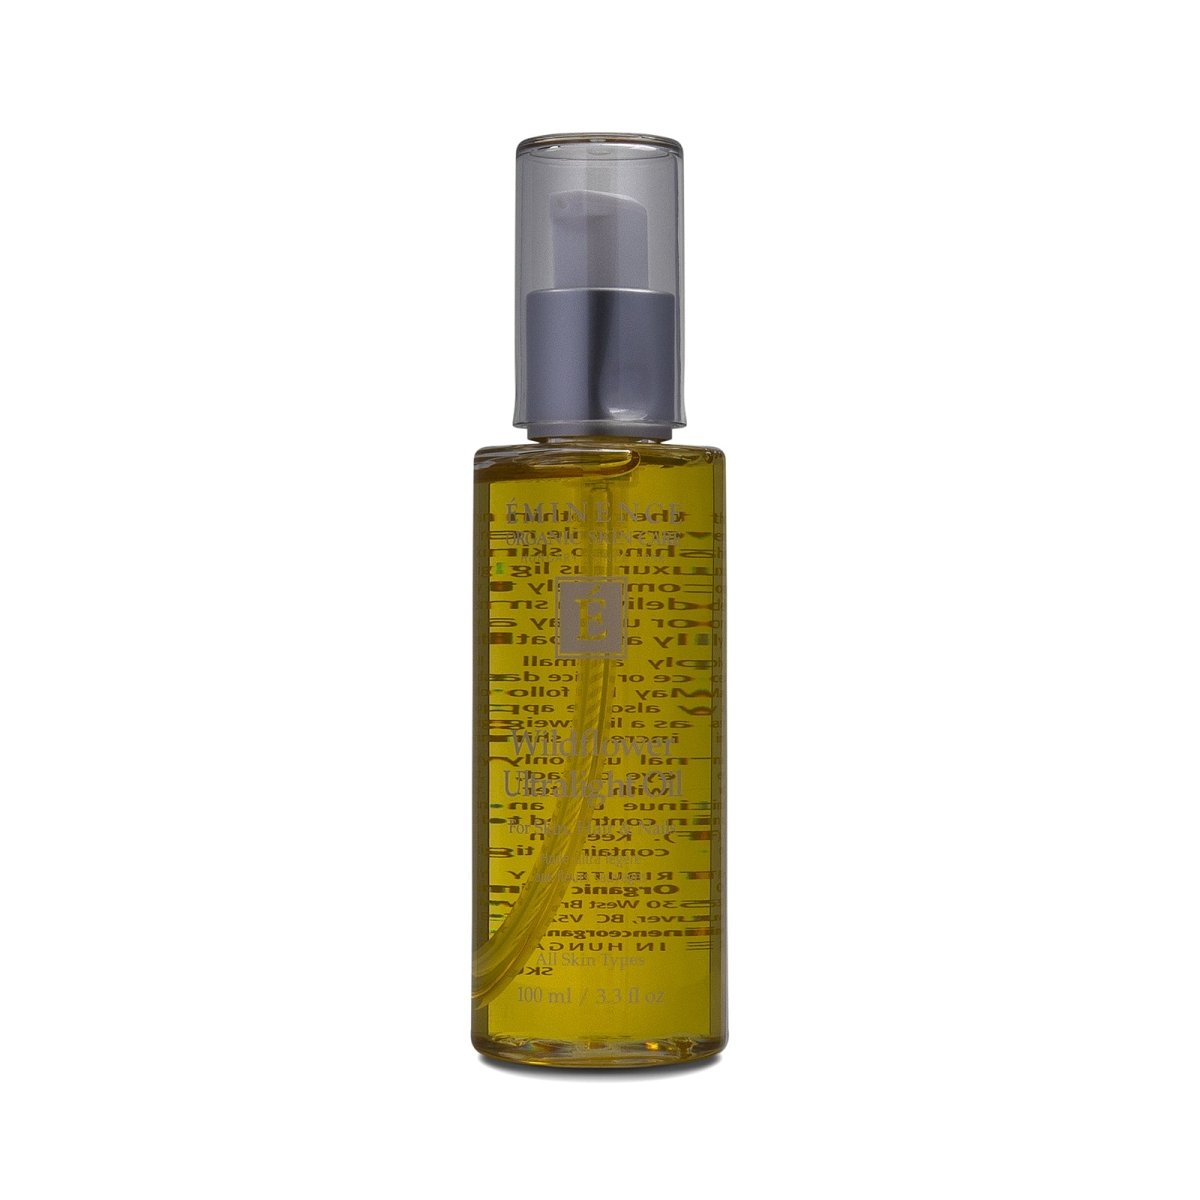 Eminence Organic Skin Care Wildflower Ultralight Body Oil